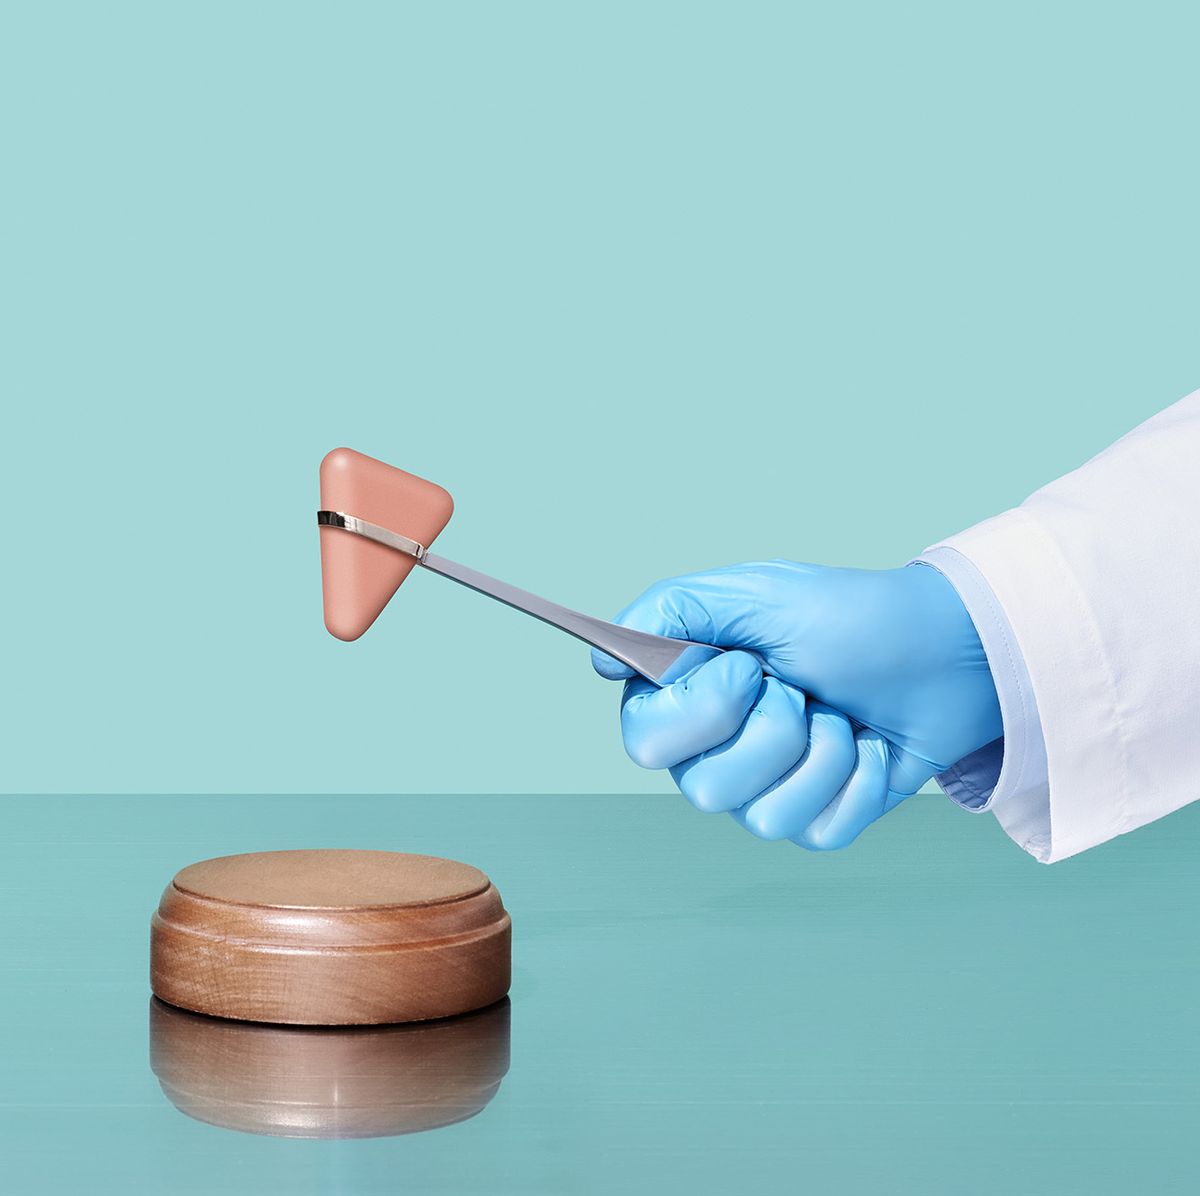 a doctor's gloved hand using medical utensil as judge's gavel